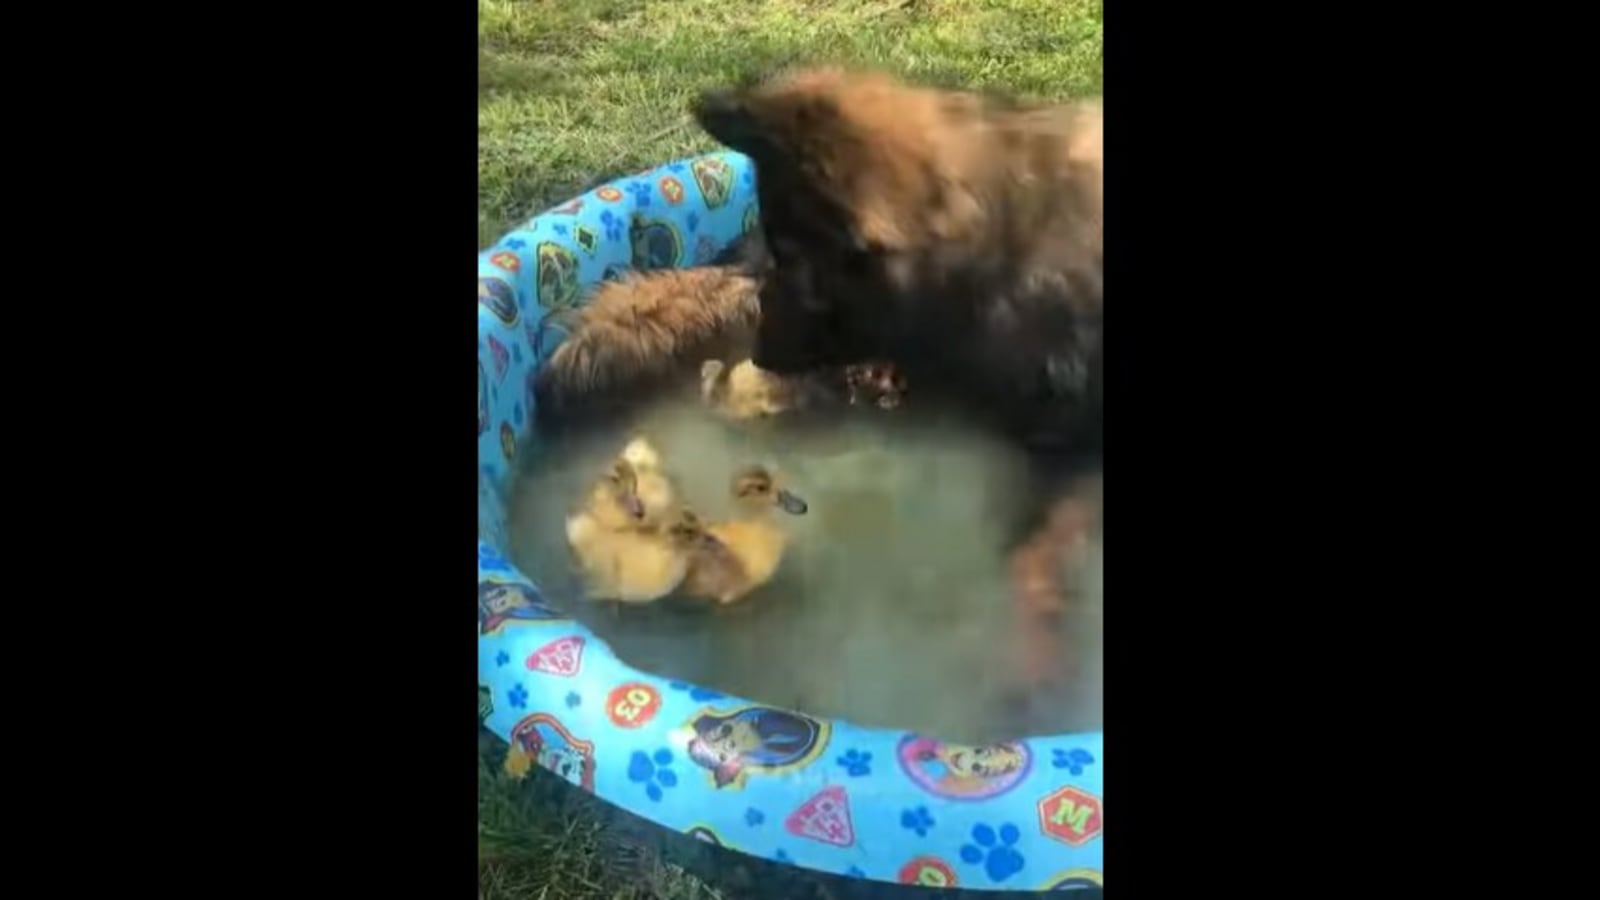 German Shepherd doggo’s playtime with cute baby ducklings is a must-watch